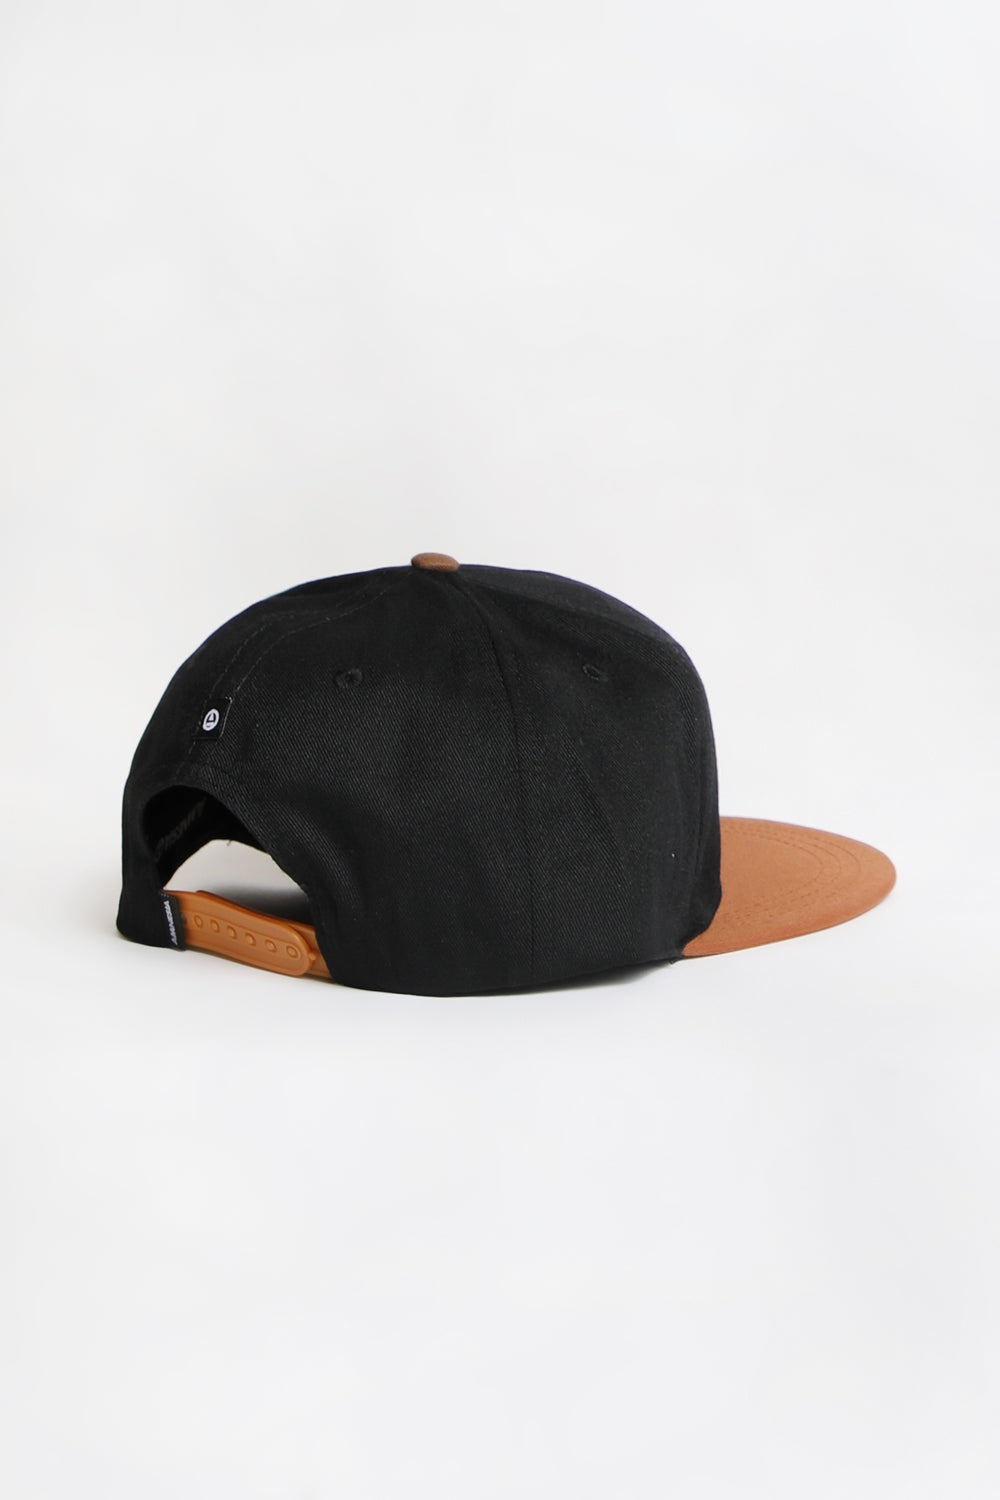 Amnesia Mens 2-Tone Flat Brim Hat Black